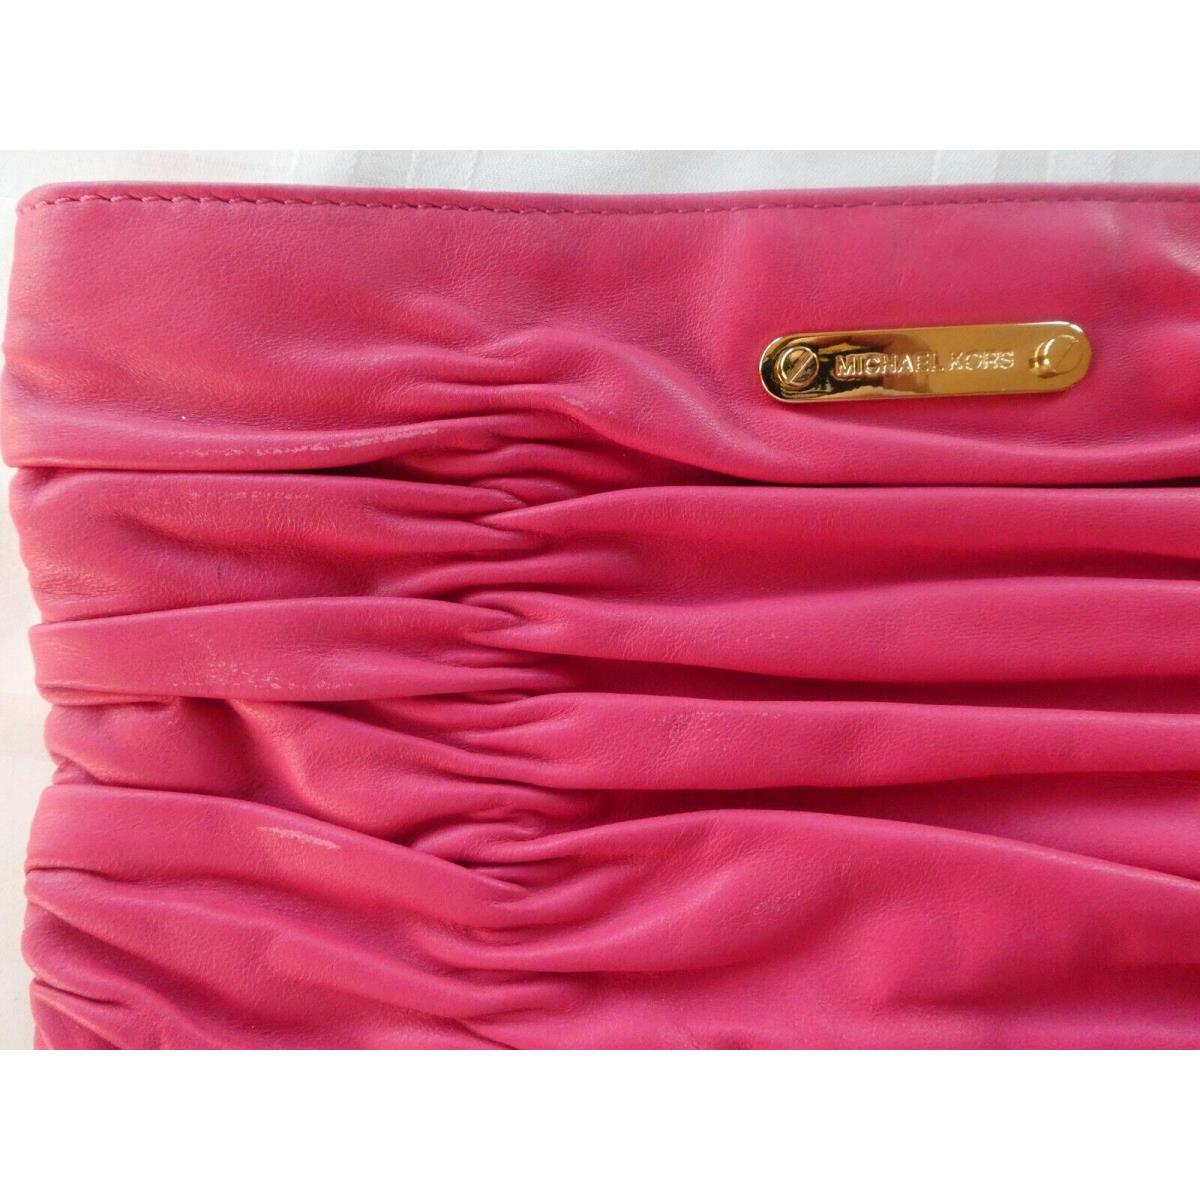 Michael Kors wallet  - Pink